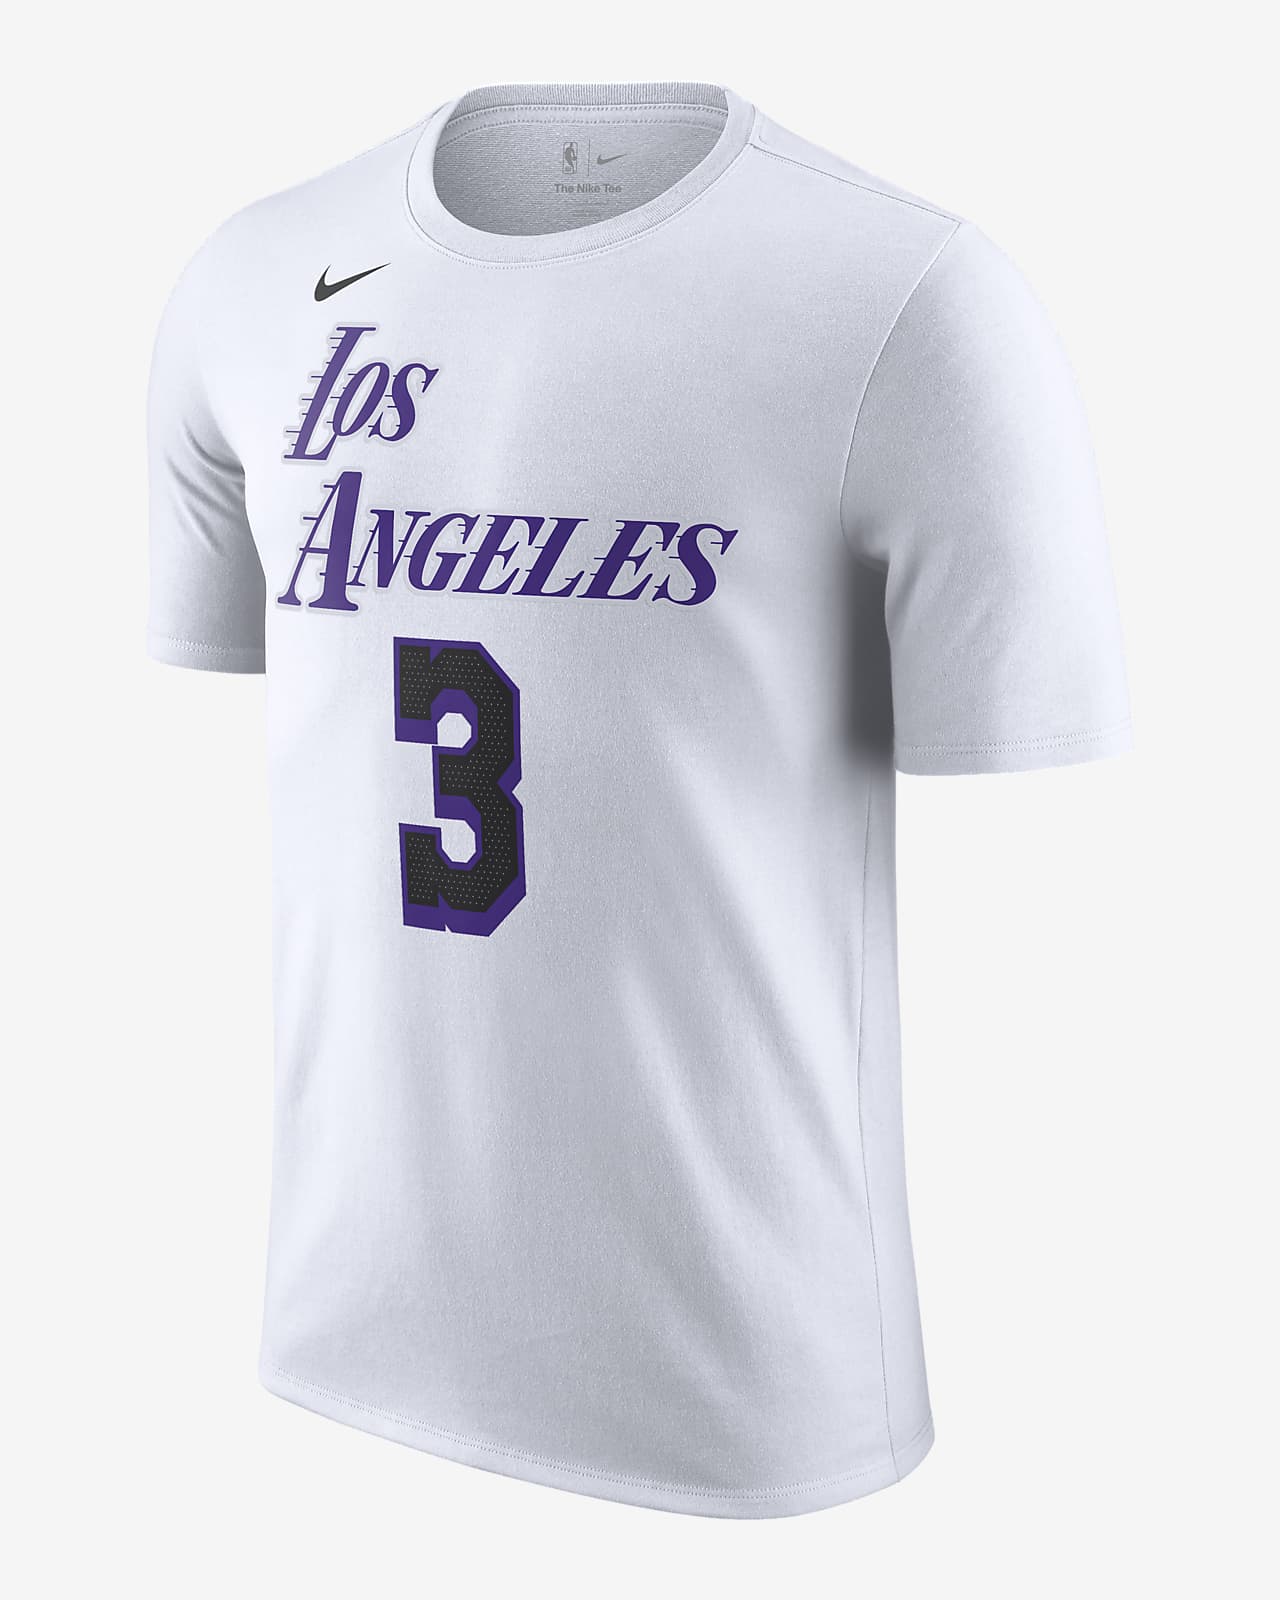 Los Angeles Lakers Men's Nike NBA T-Shirt.